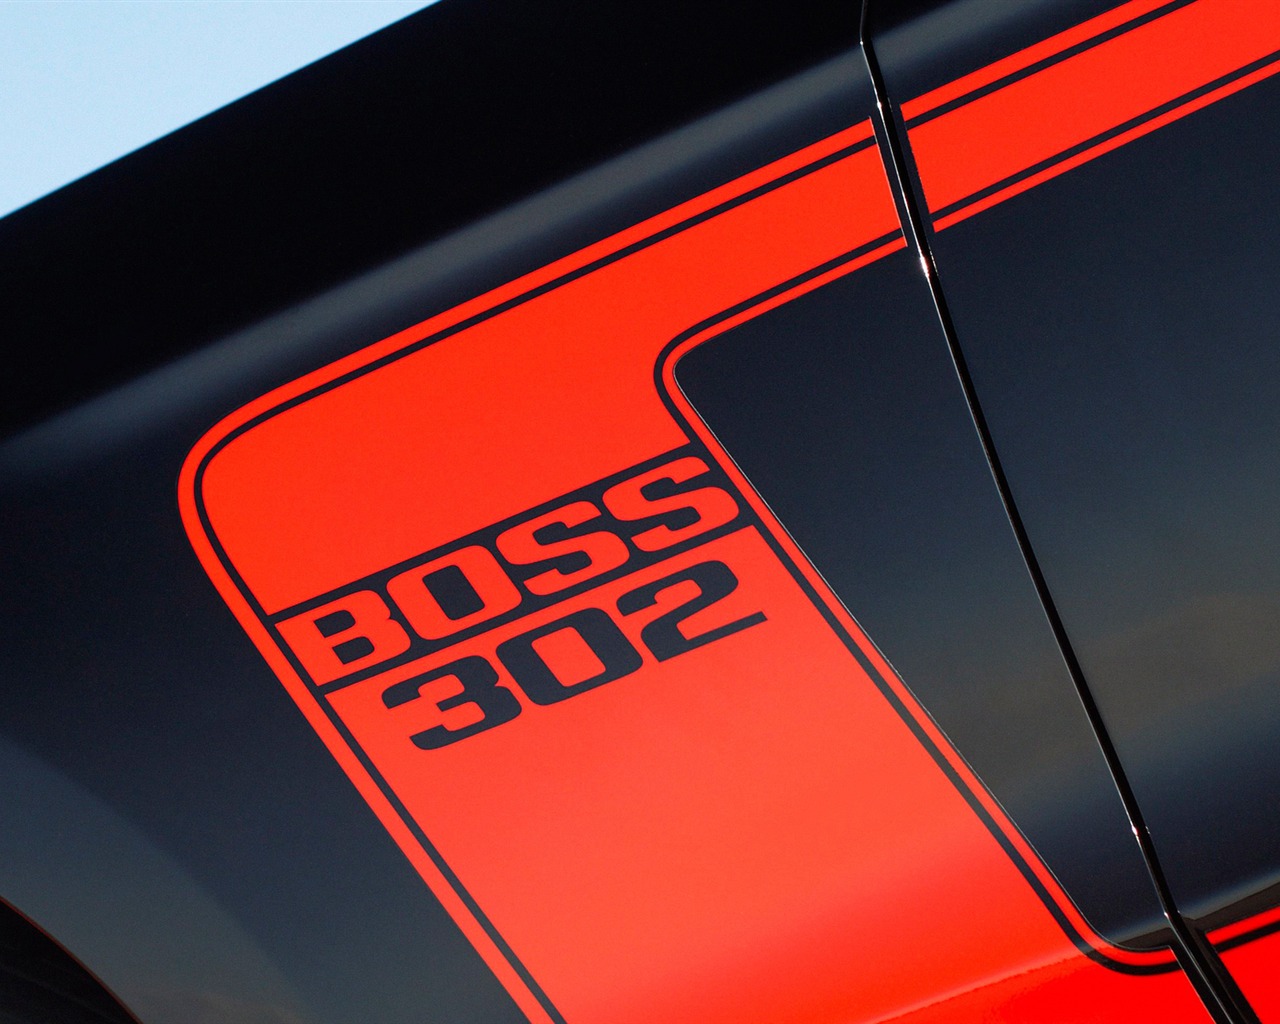 Ford Mustang Boss 302 Laguna Seca - 2012 福特 #17 - 1280x1024